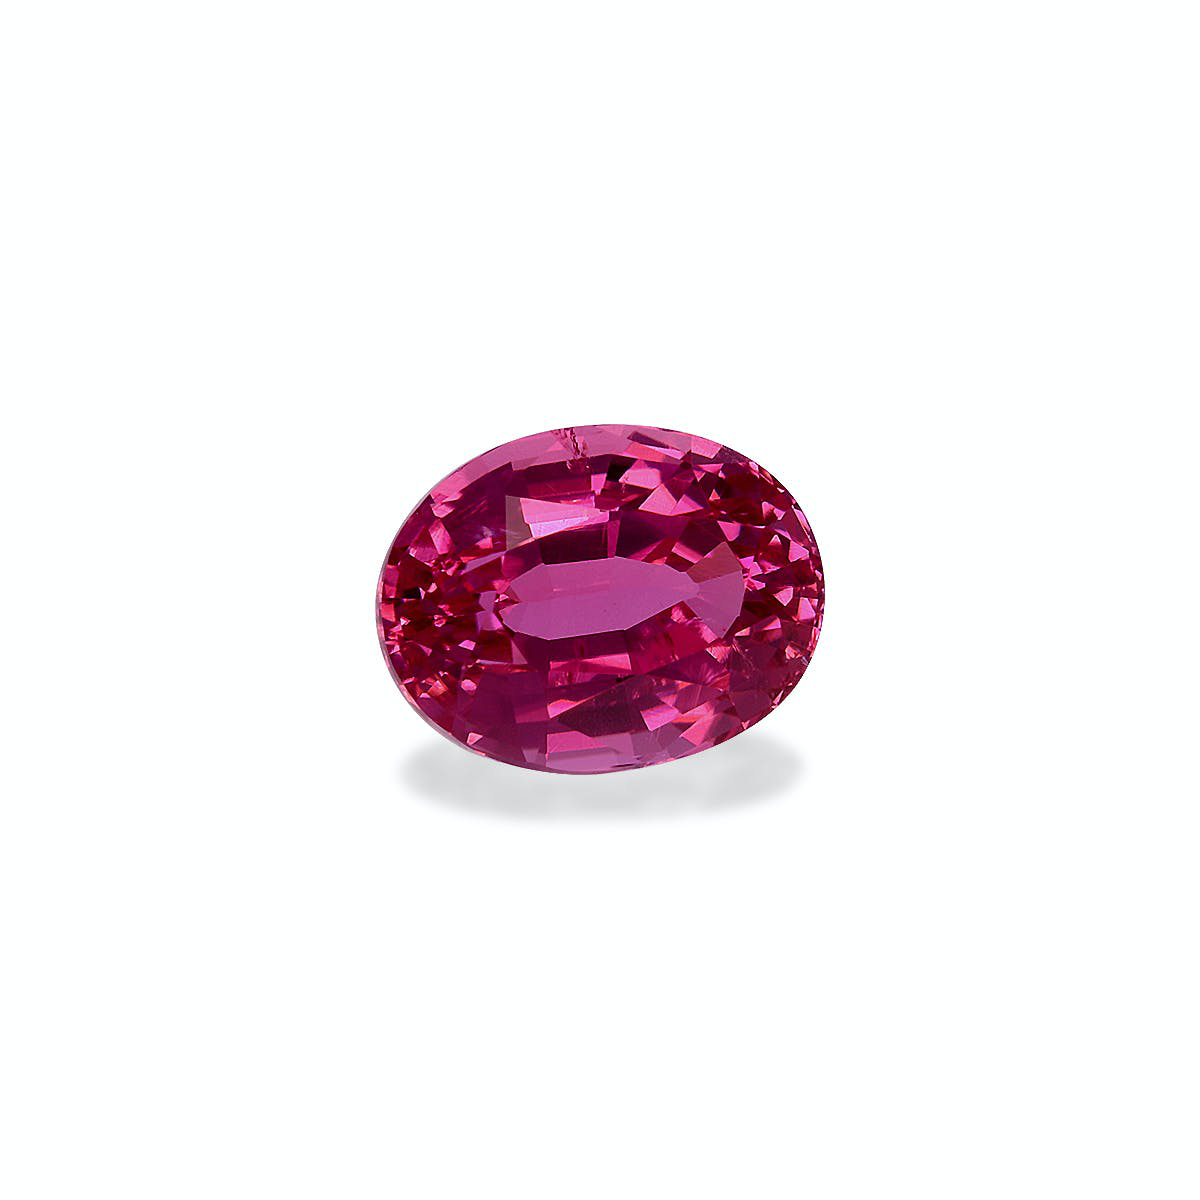 Picture of Fuscia Pink Rubellite Tourmaline 2.44ct - 9x7mm (RL1230)